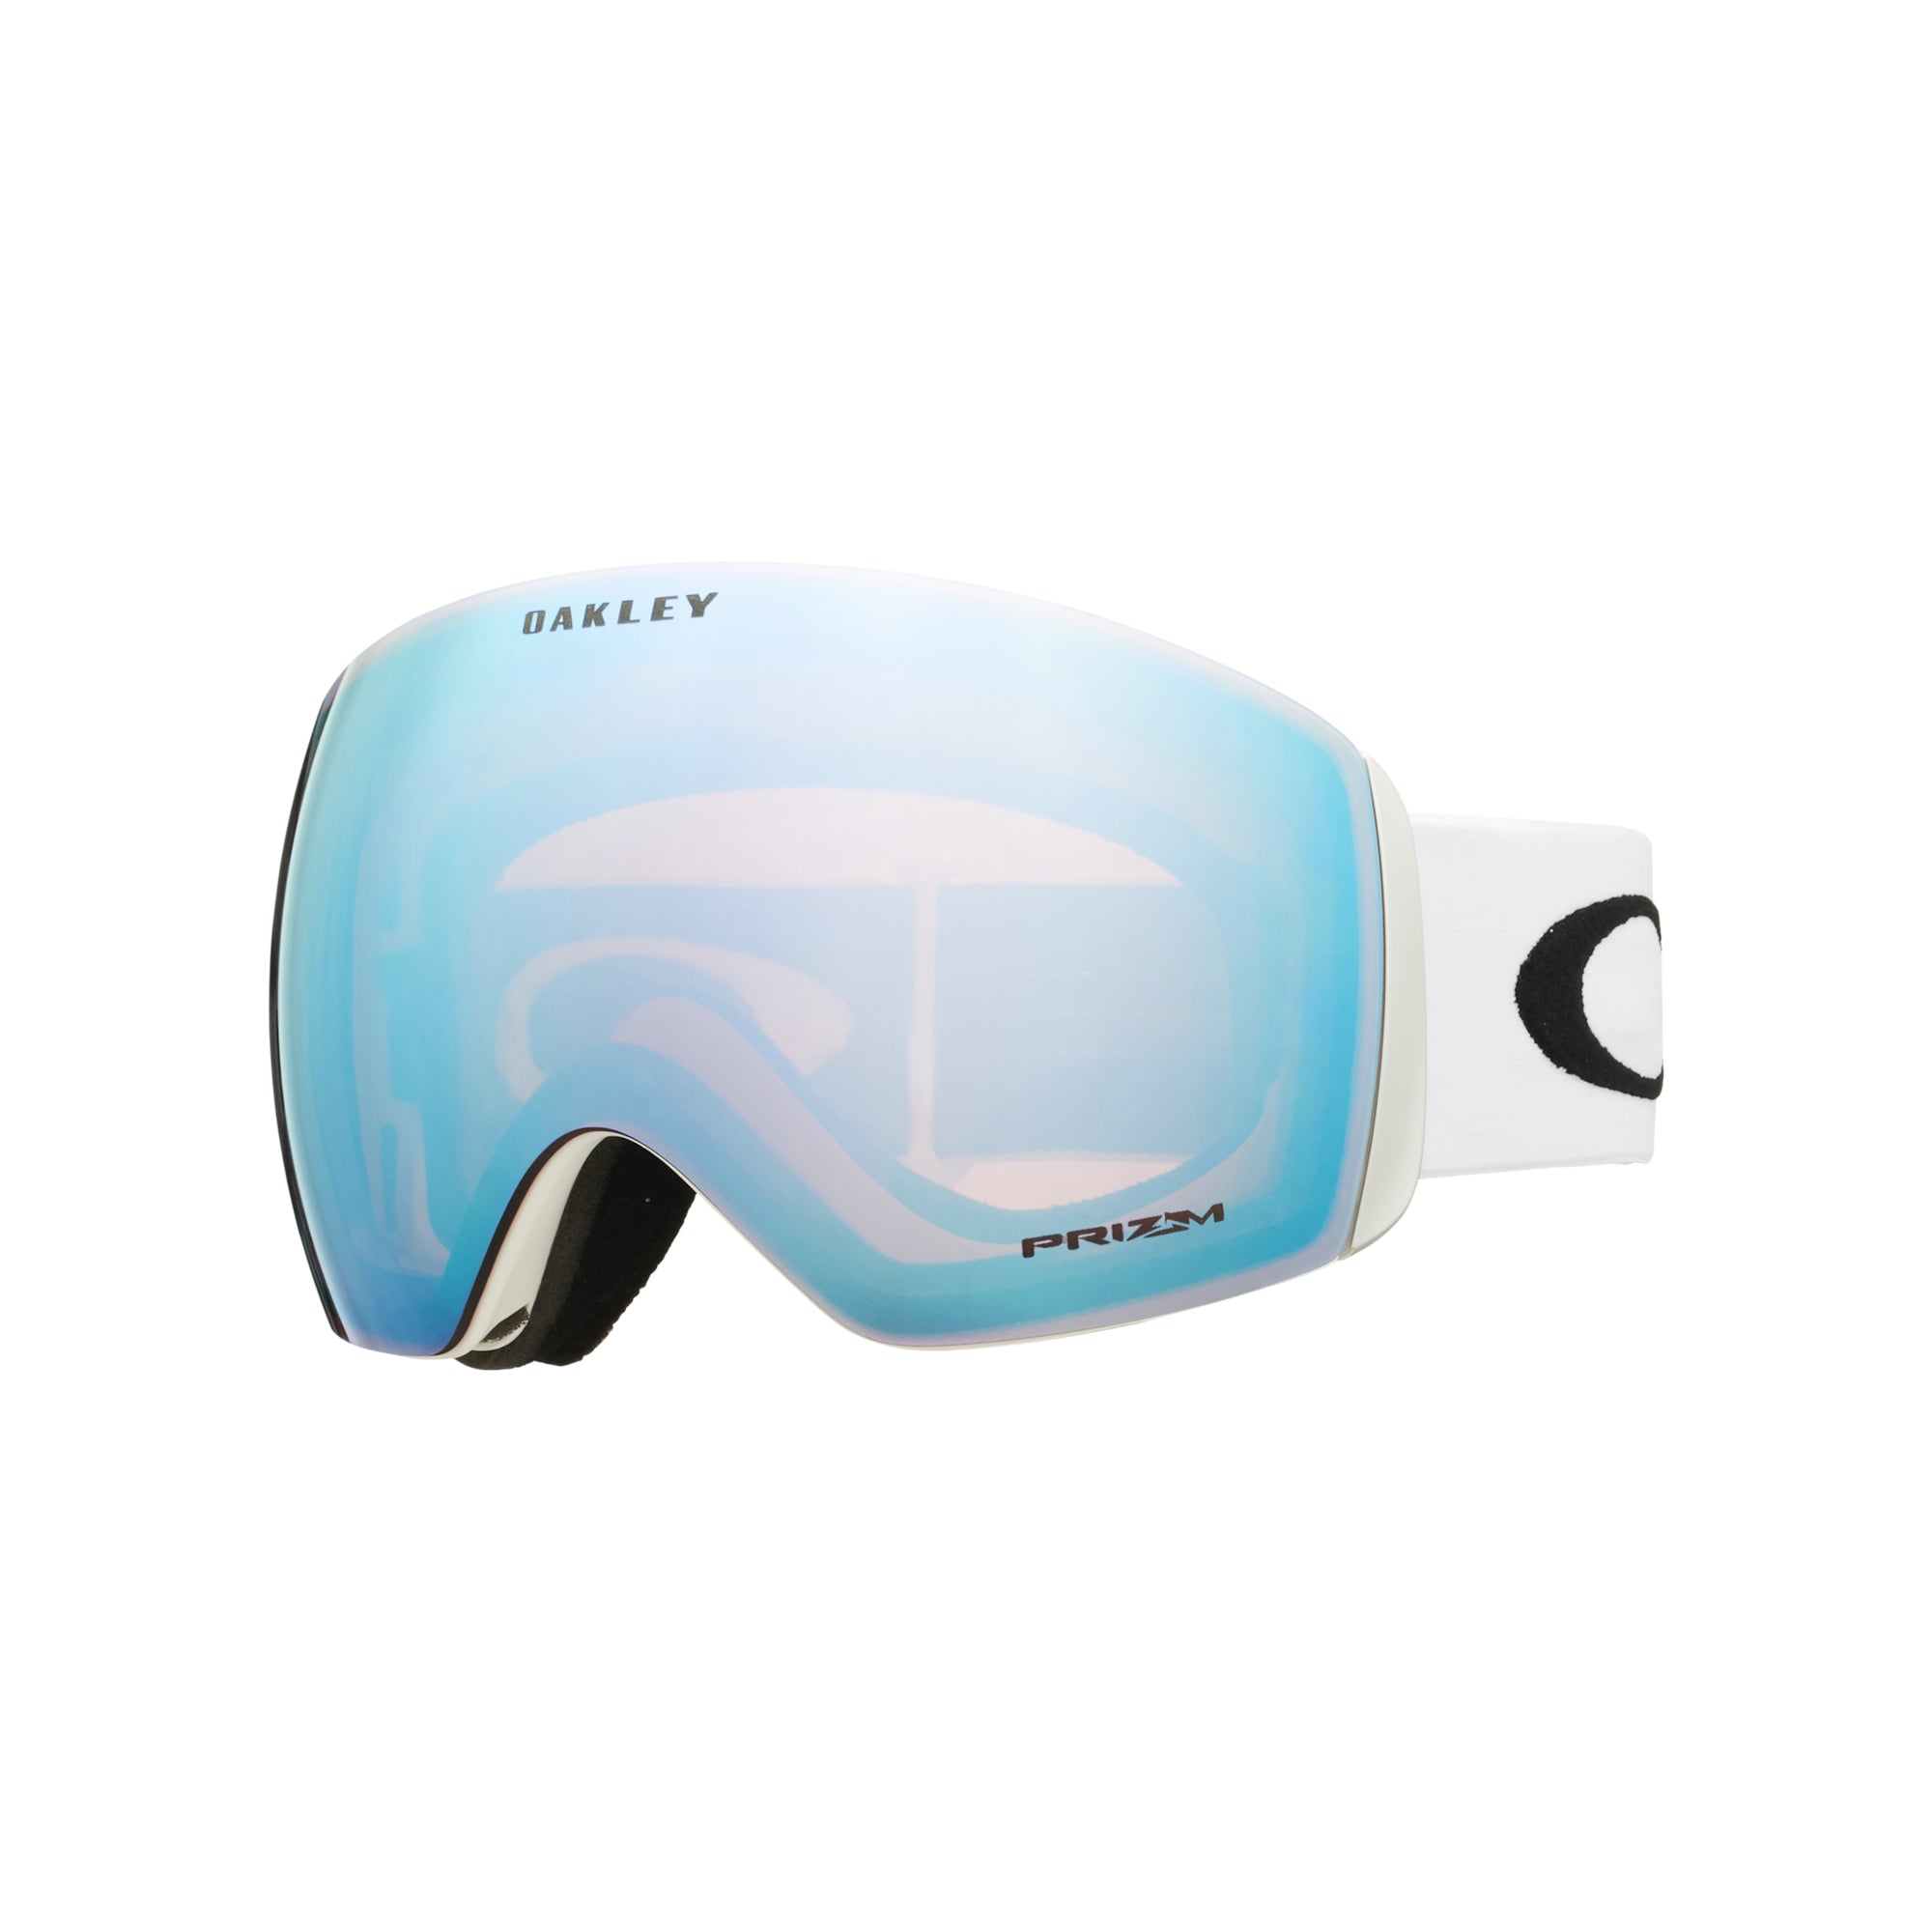 Oakley FLIGHT DECK L Goggles - Fresh Skis